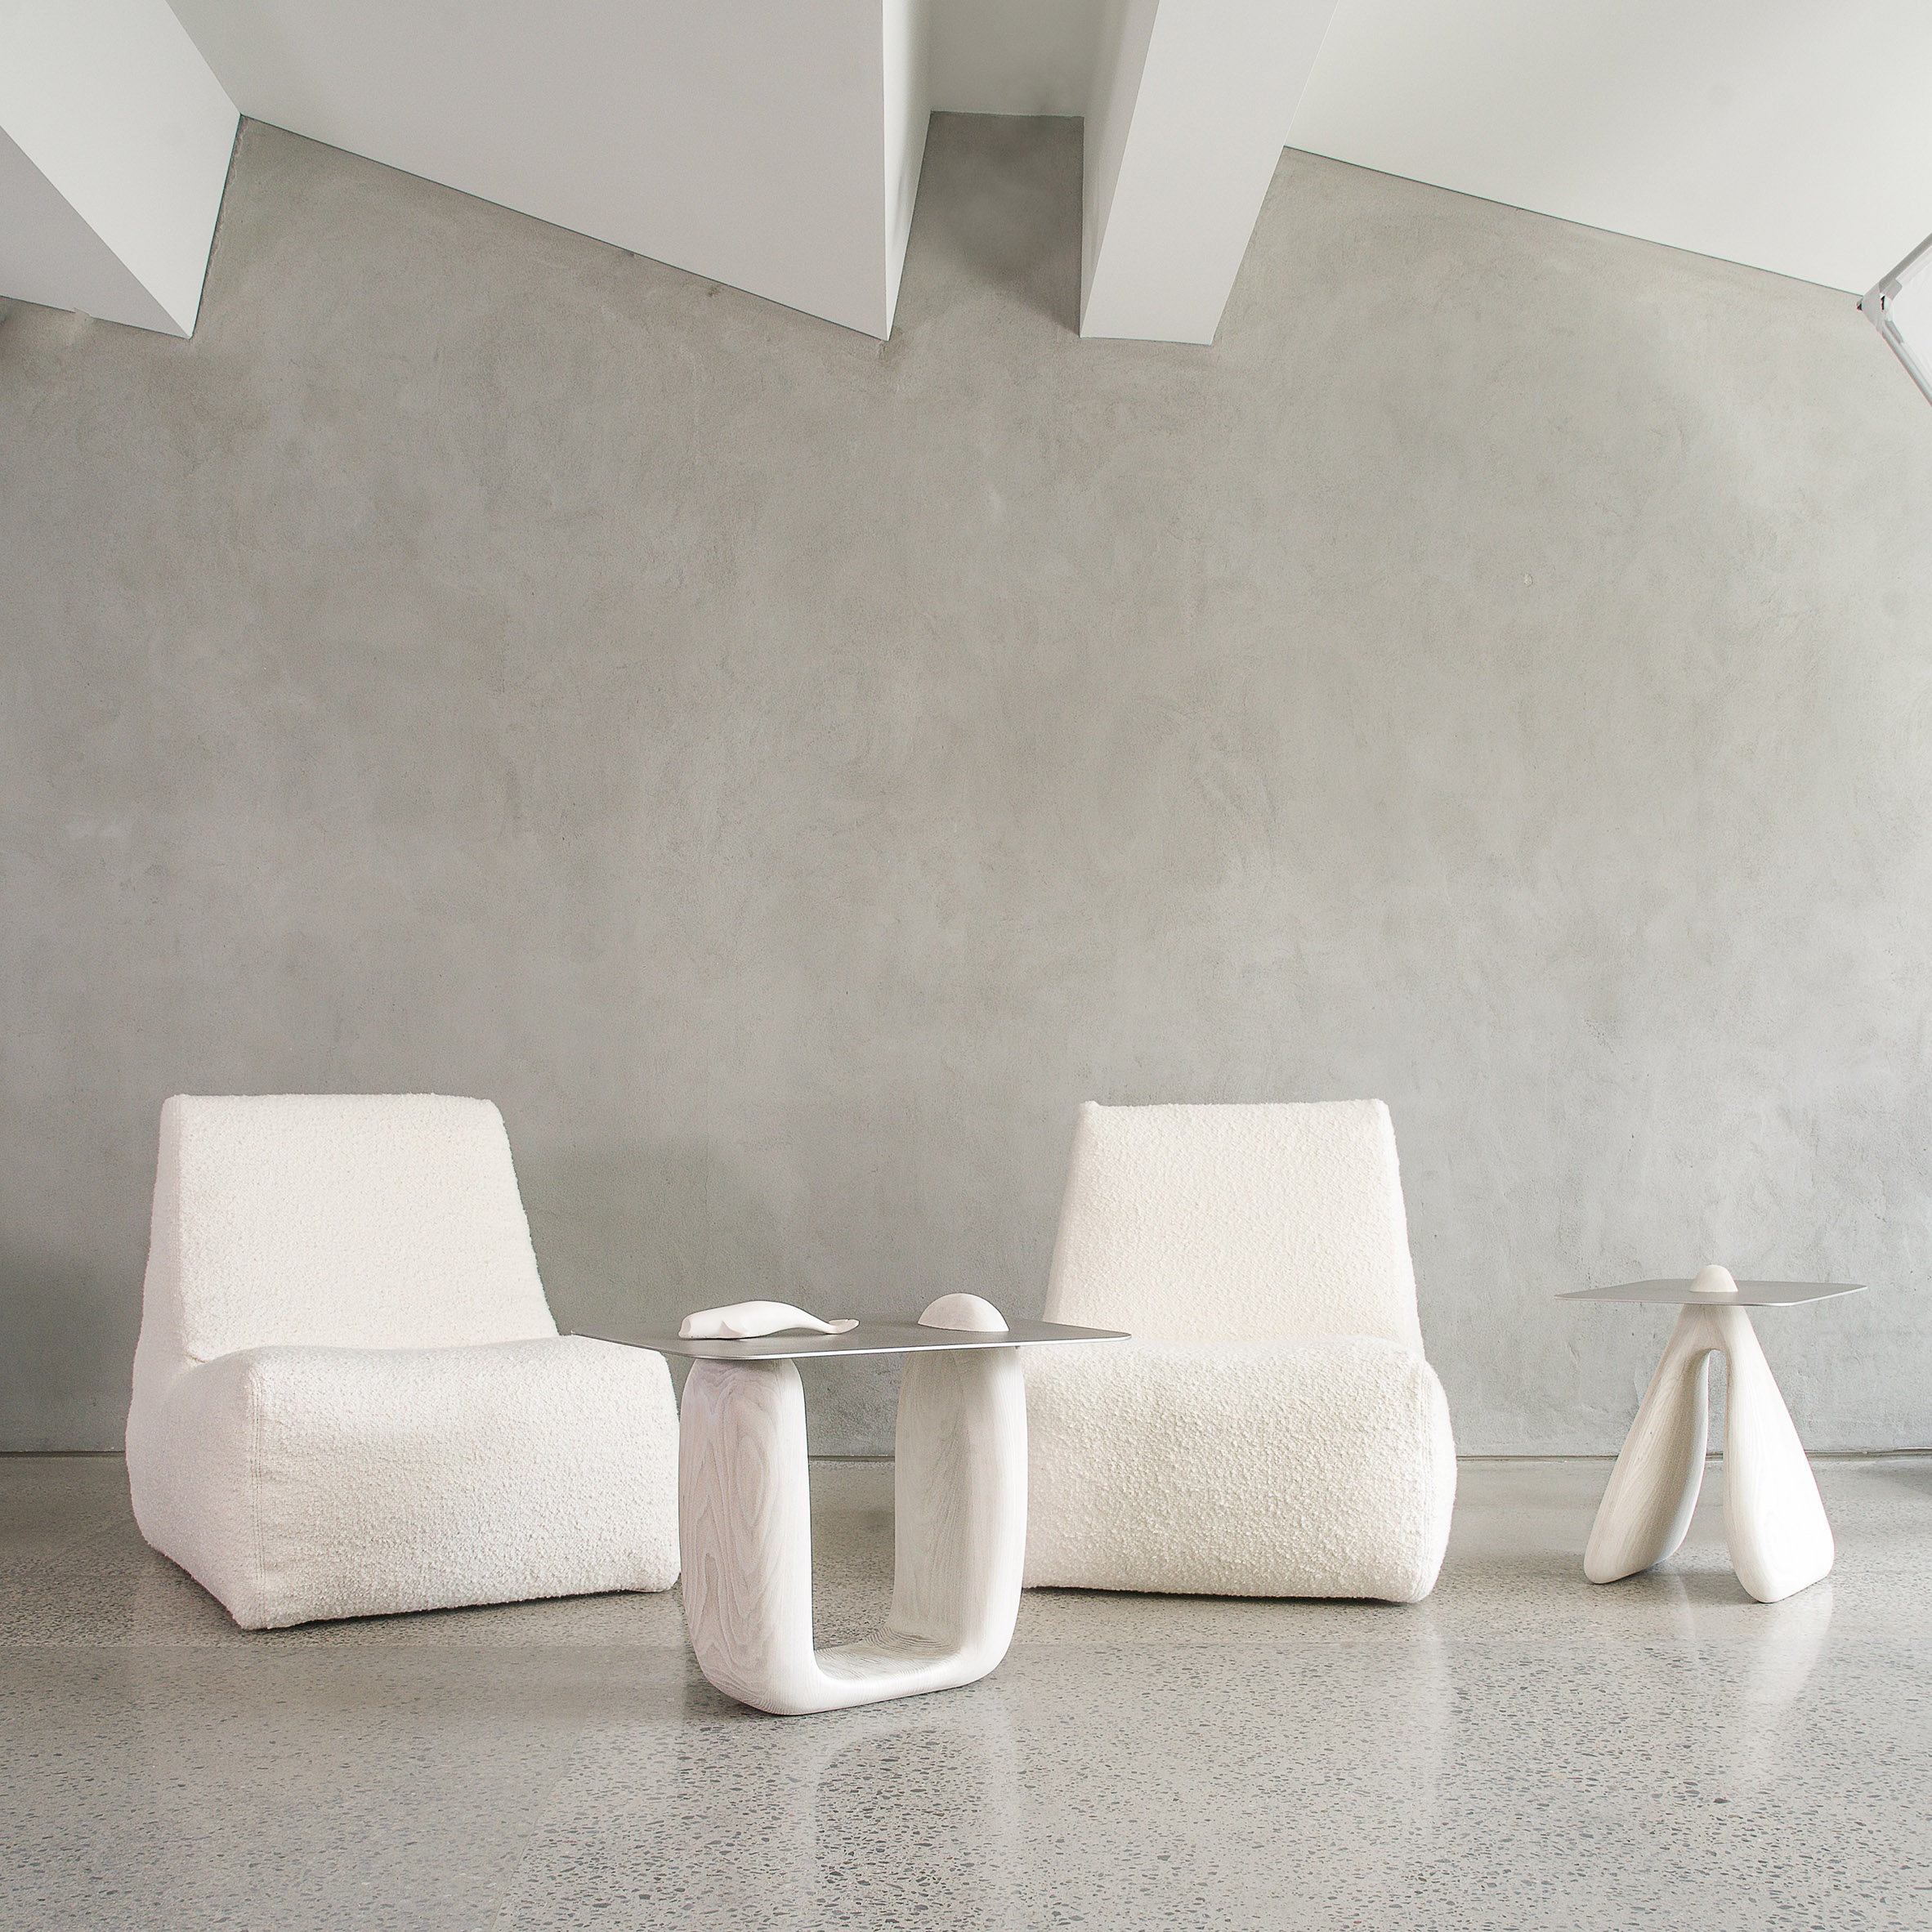 Two Coralis tables by Nadine Hajjar Studio next to two white seats